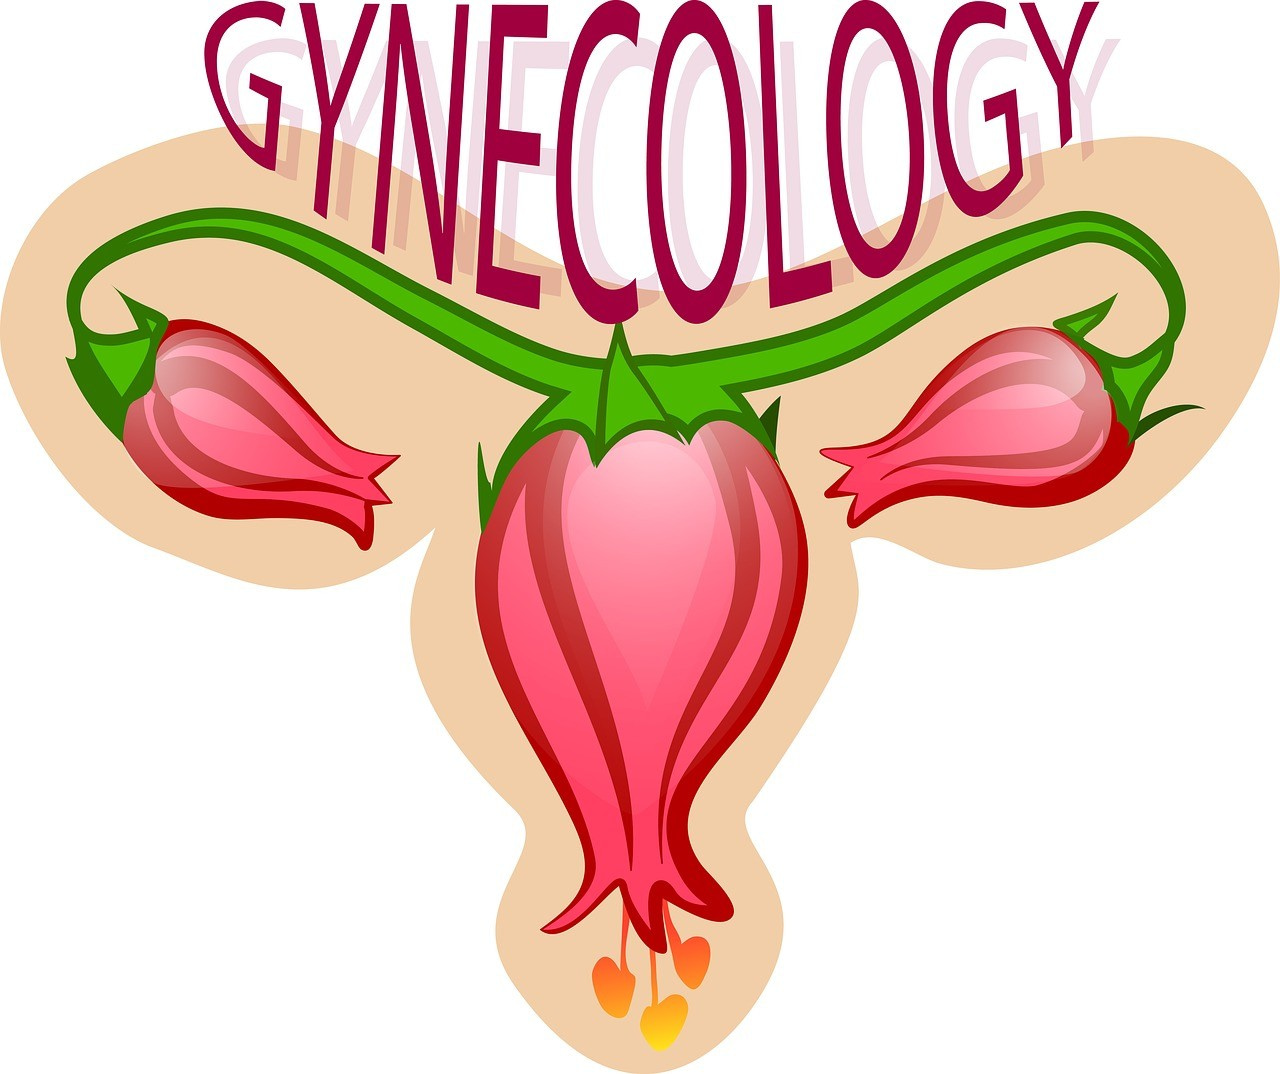 gynecology, flower, uterus